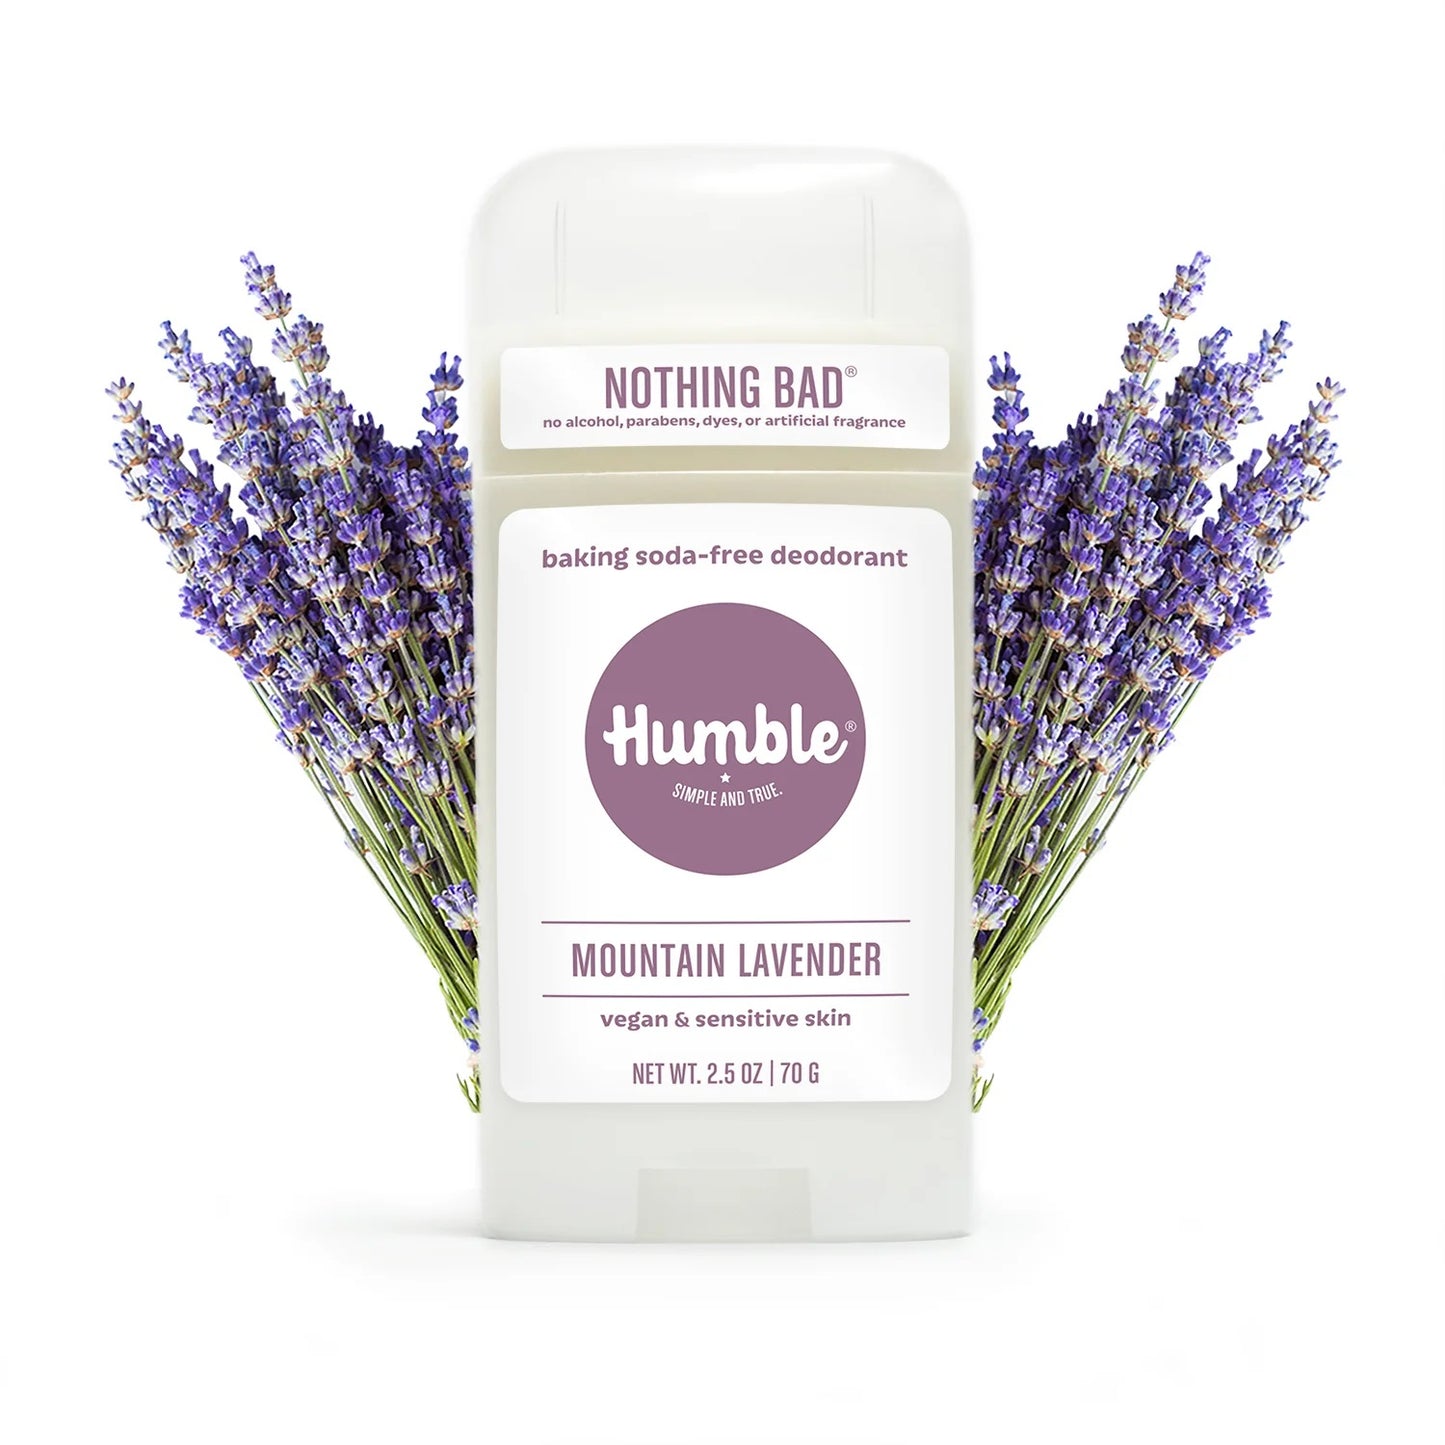 HUMBLE DEODORANT Mountain Lavender Vegan Deodorant full size